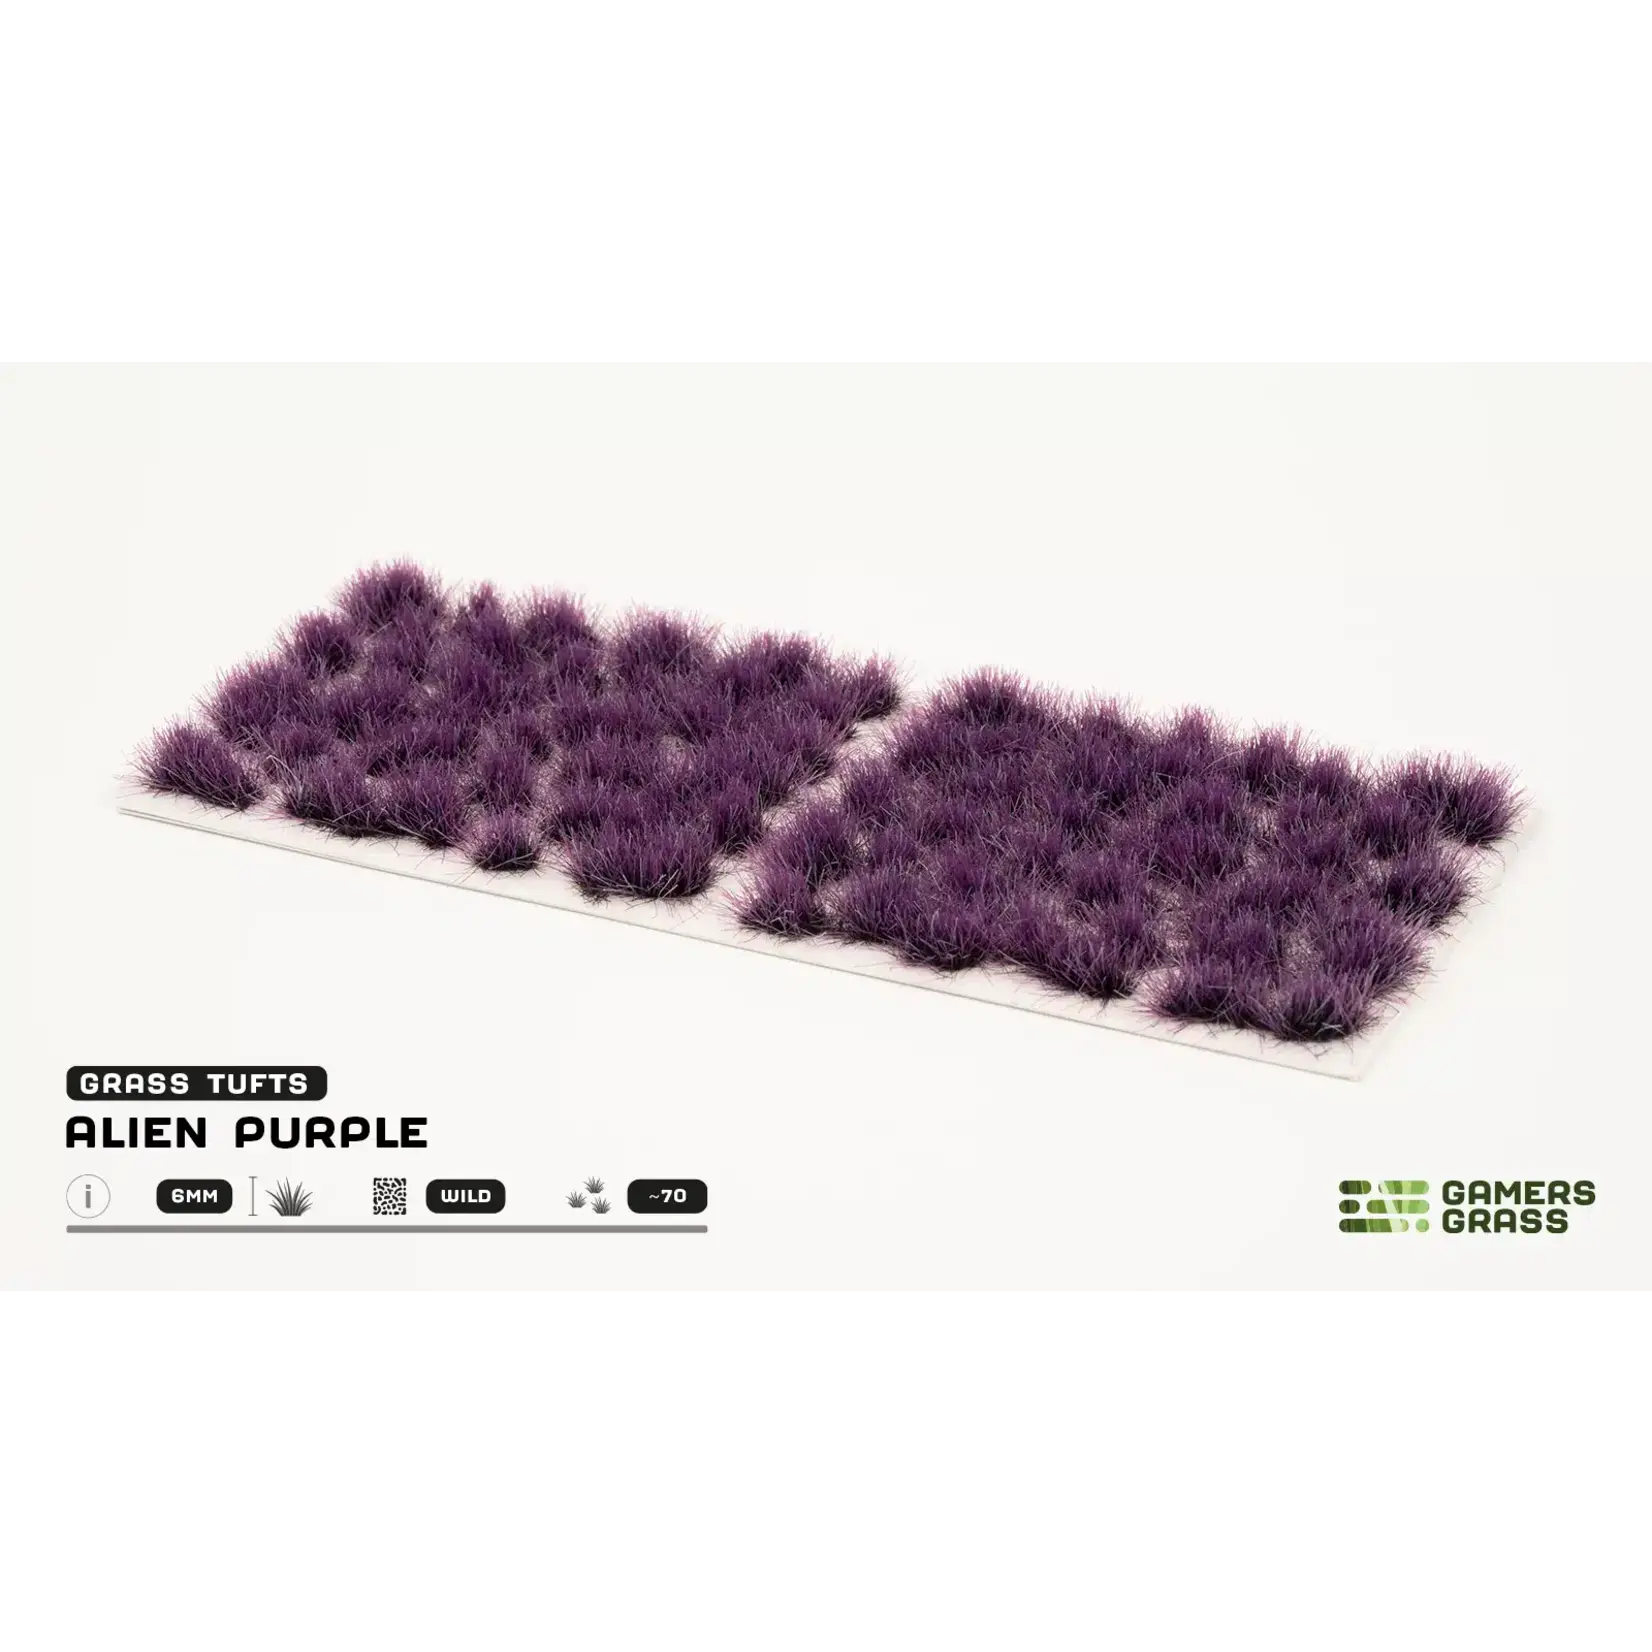 Gamers Grass Alien Tufts Purple (6mm)